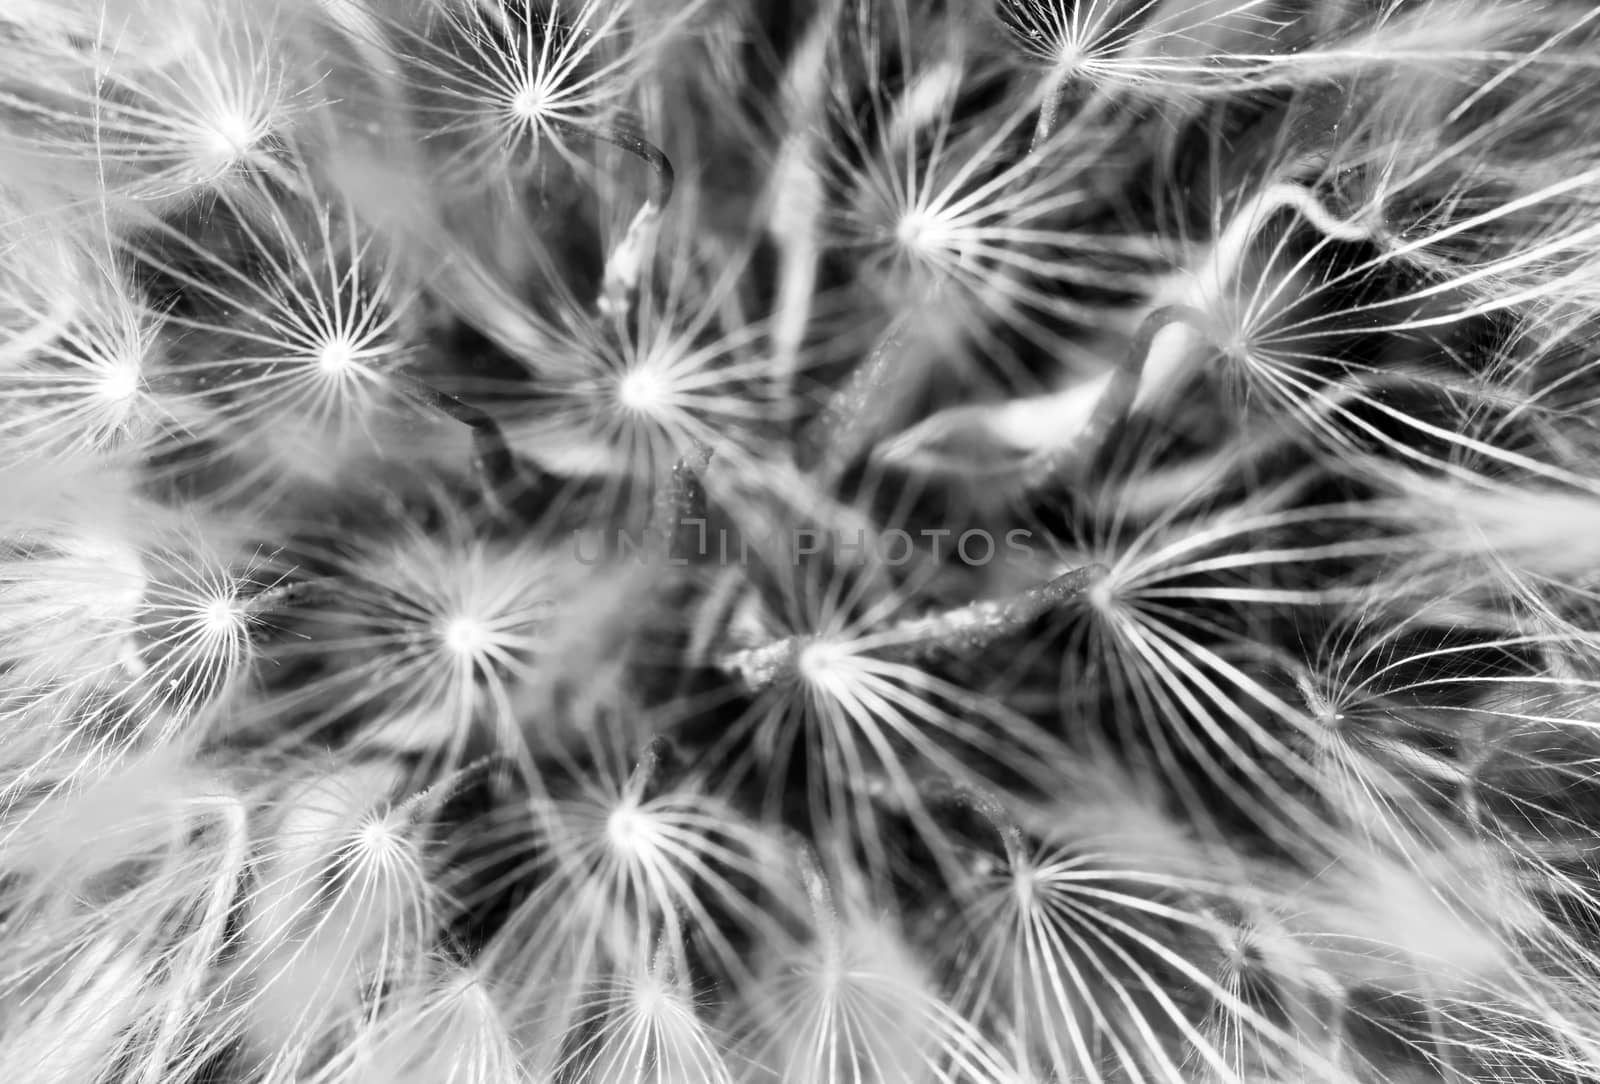 A super macro image showing detail of Dandelion flower head